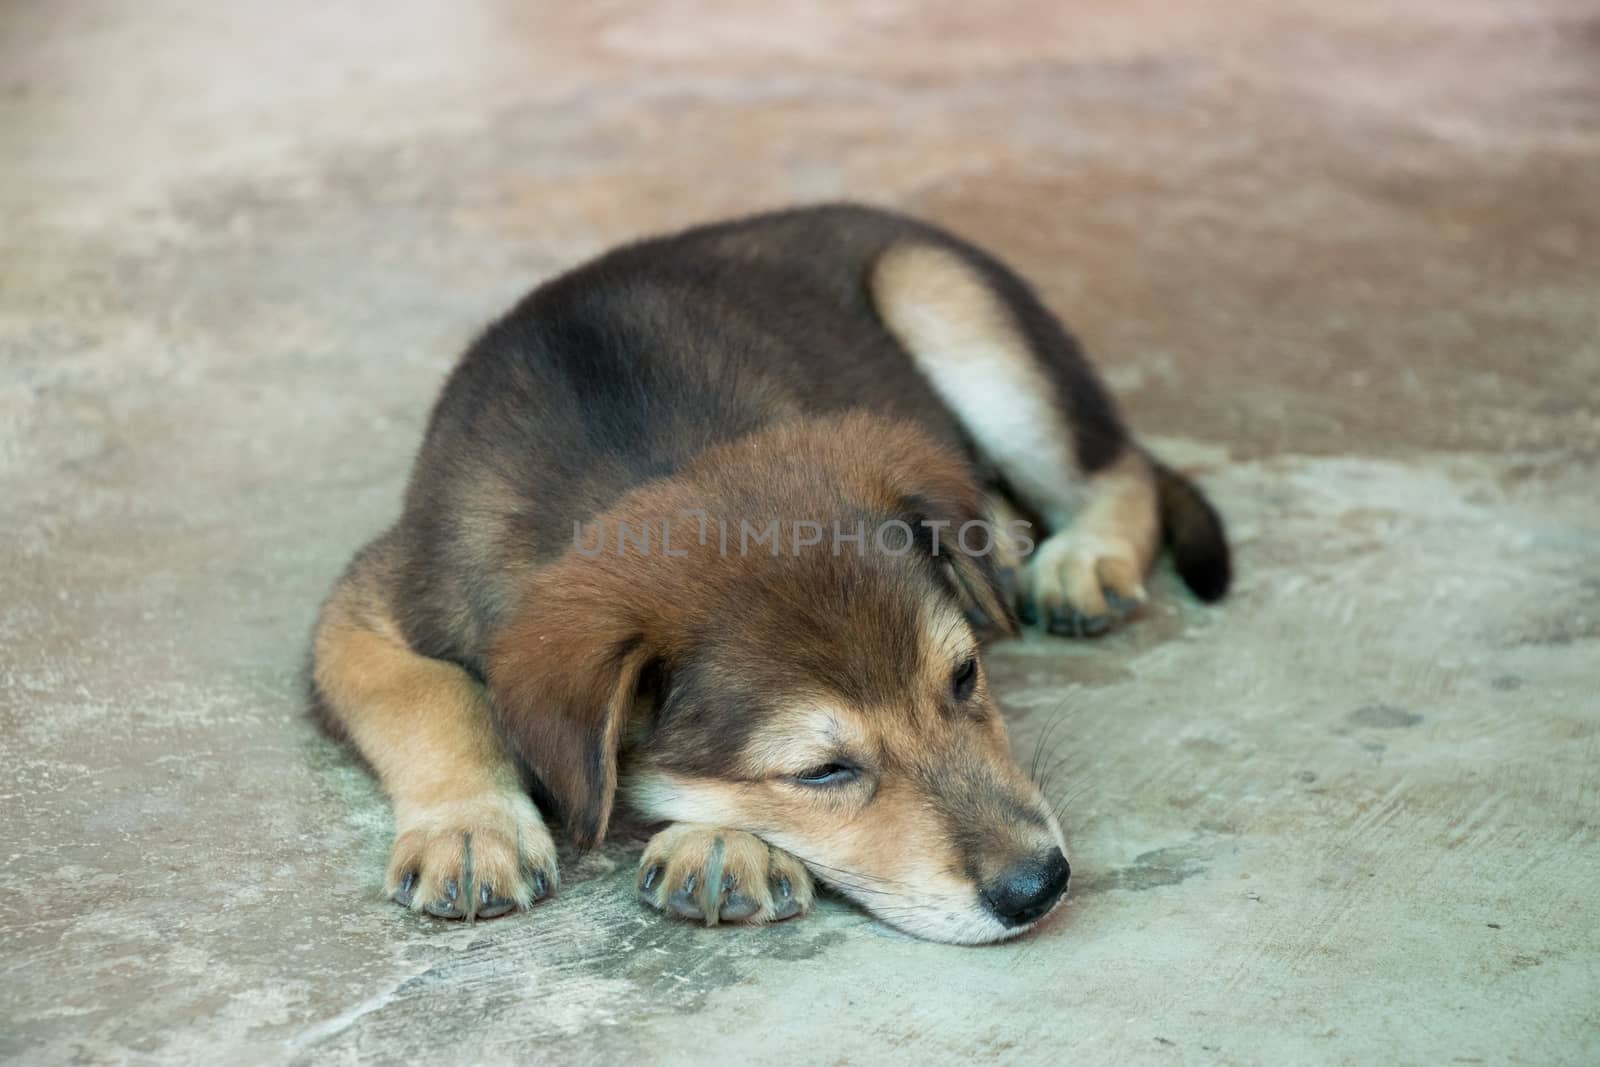 Brown white hybrid dog lying down on concrete floor